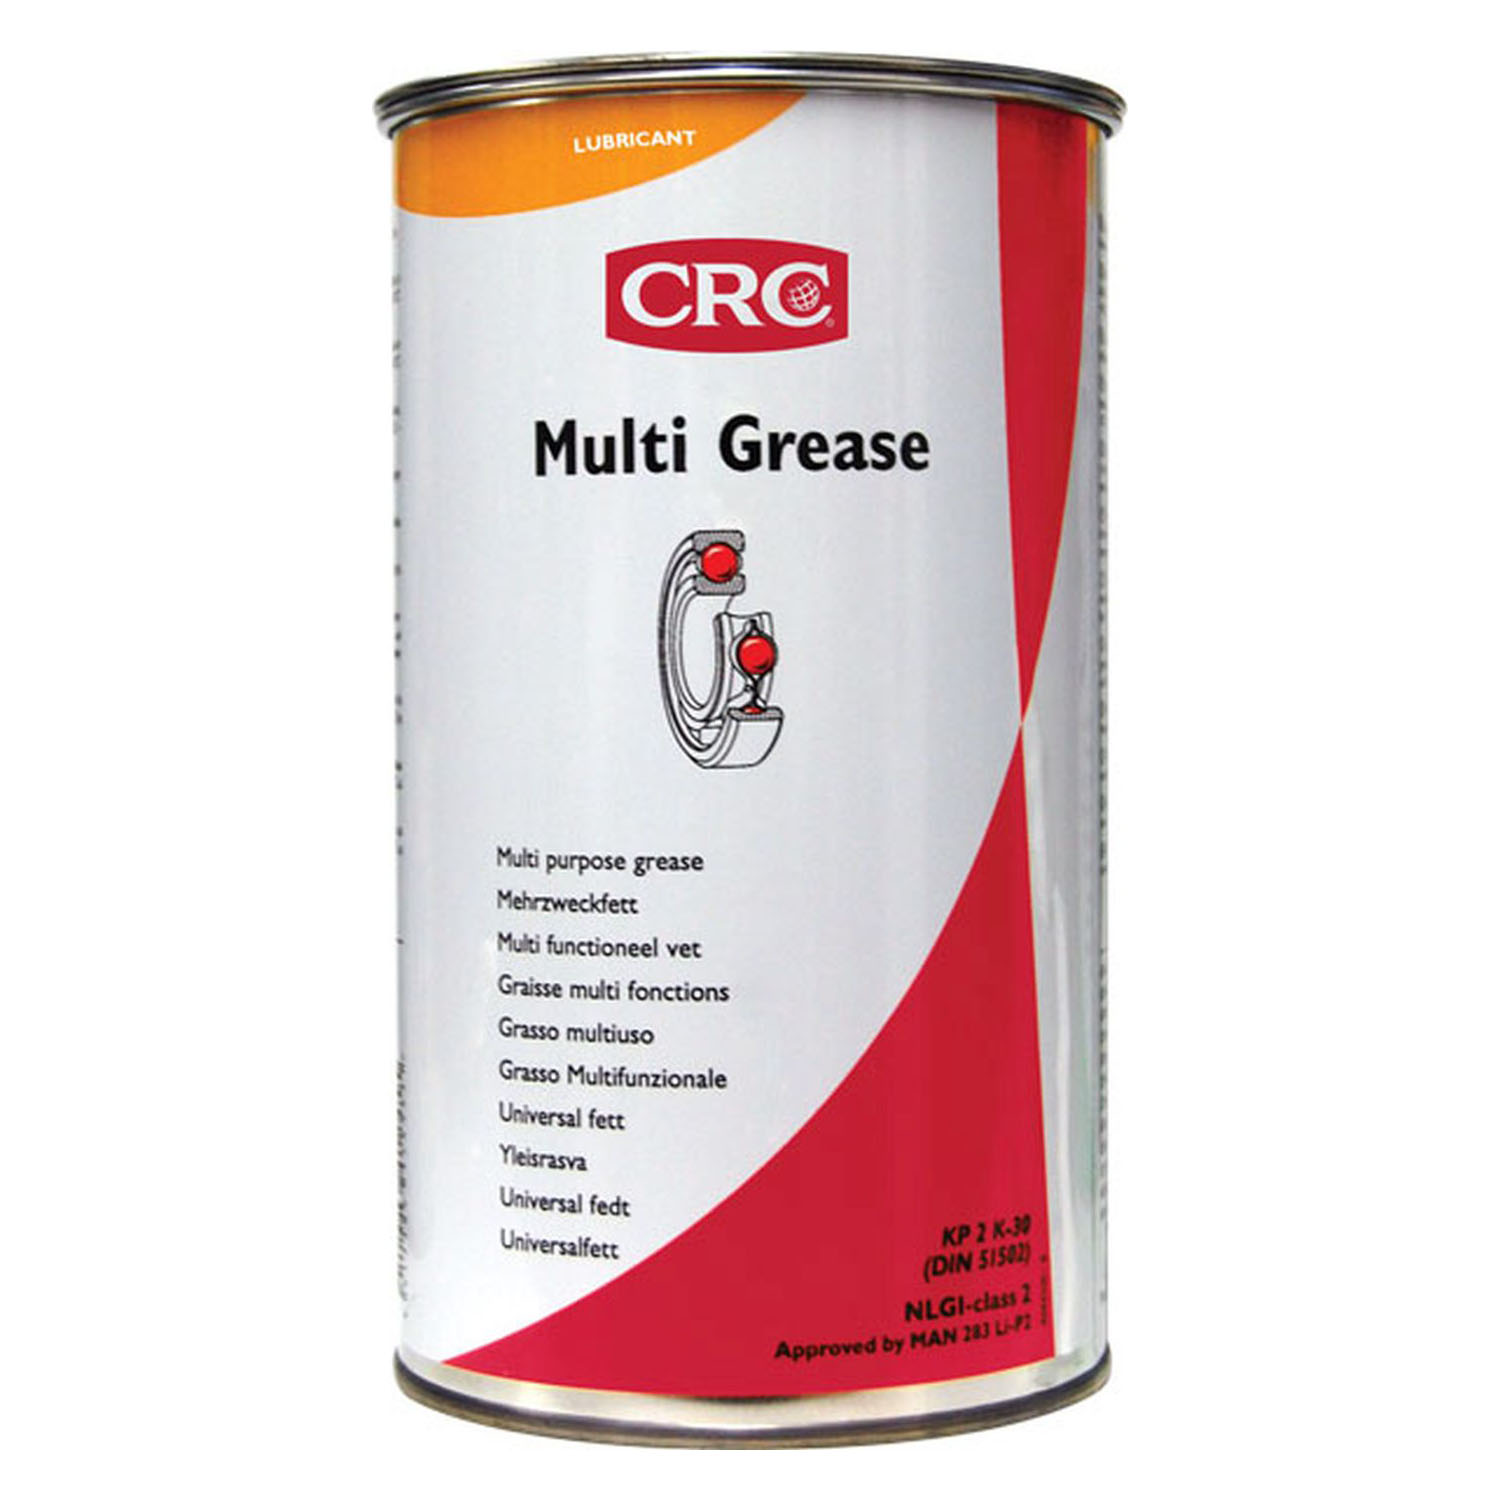 CRC Multi Grease Mehrzweckfett